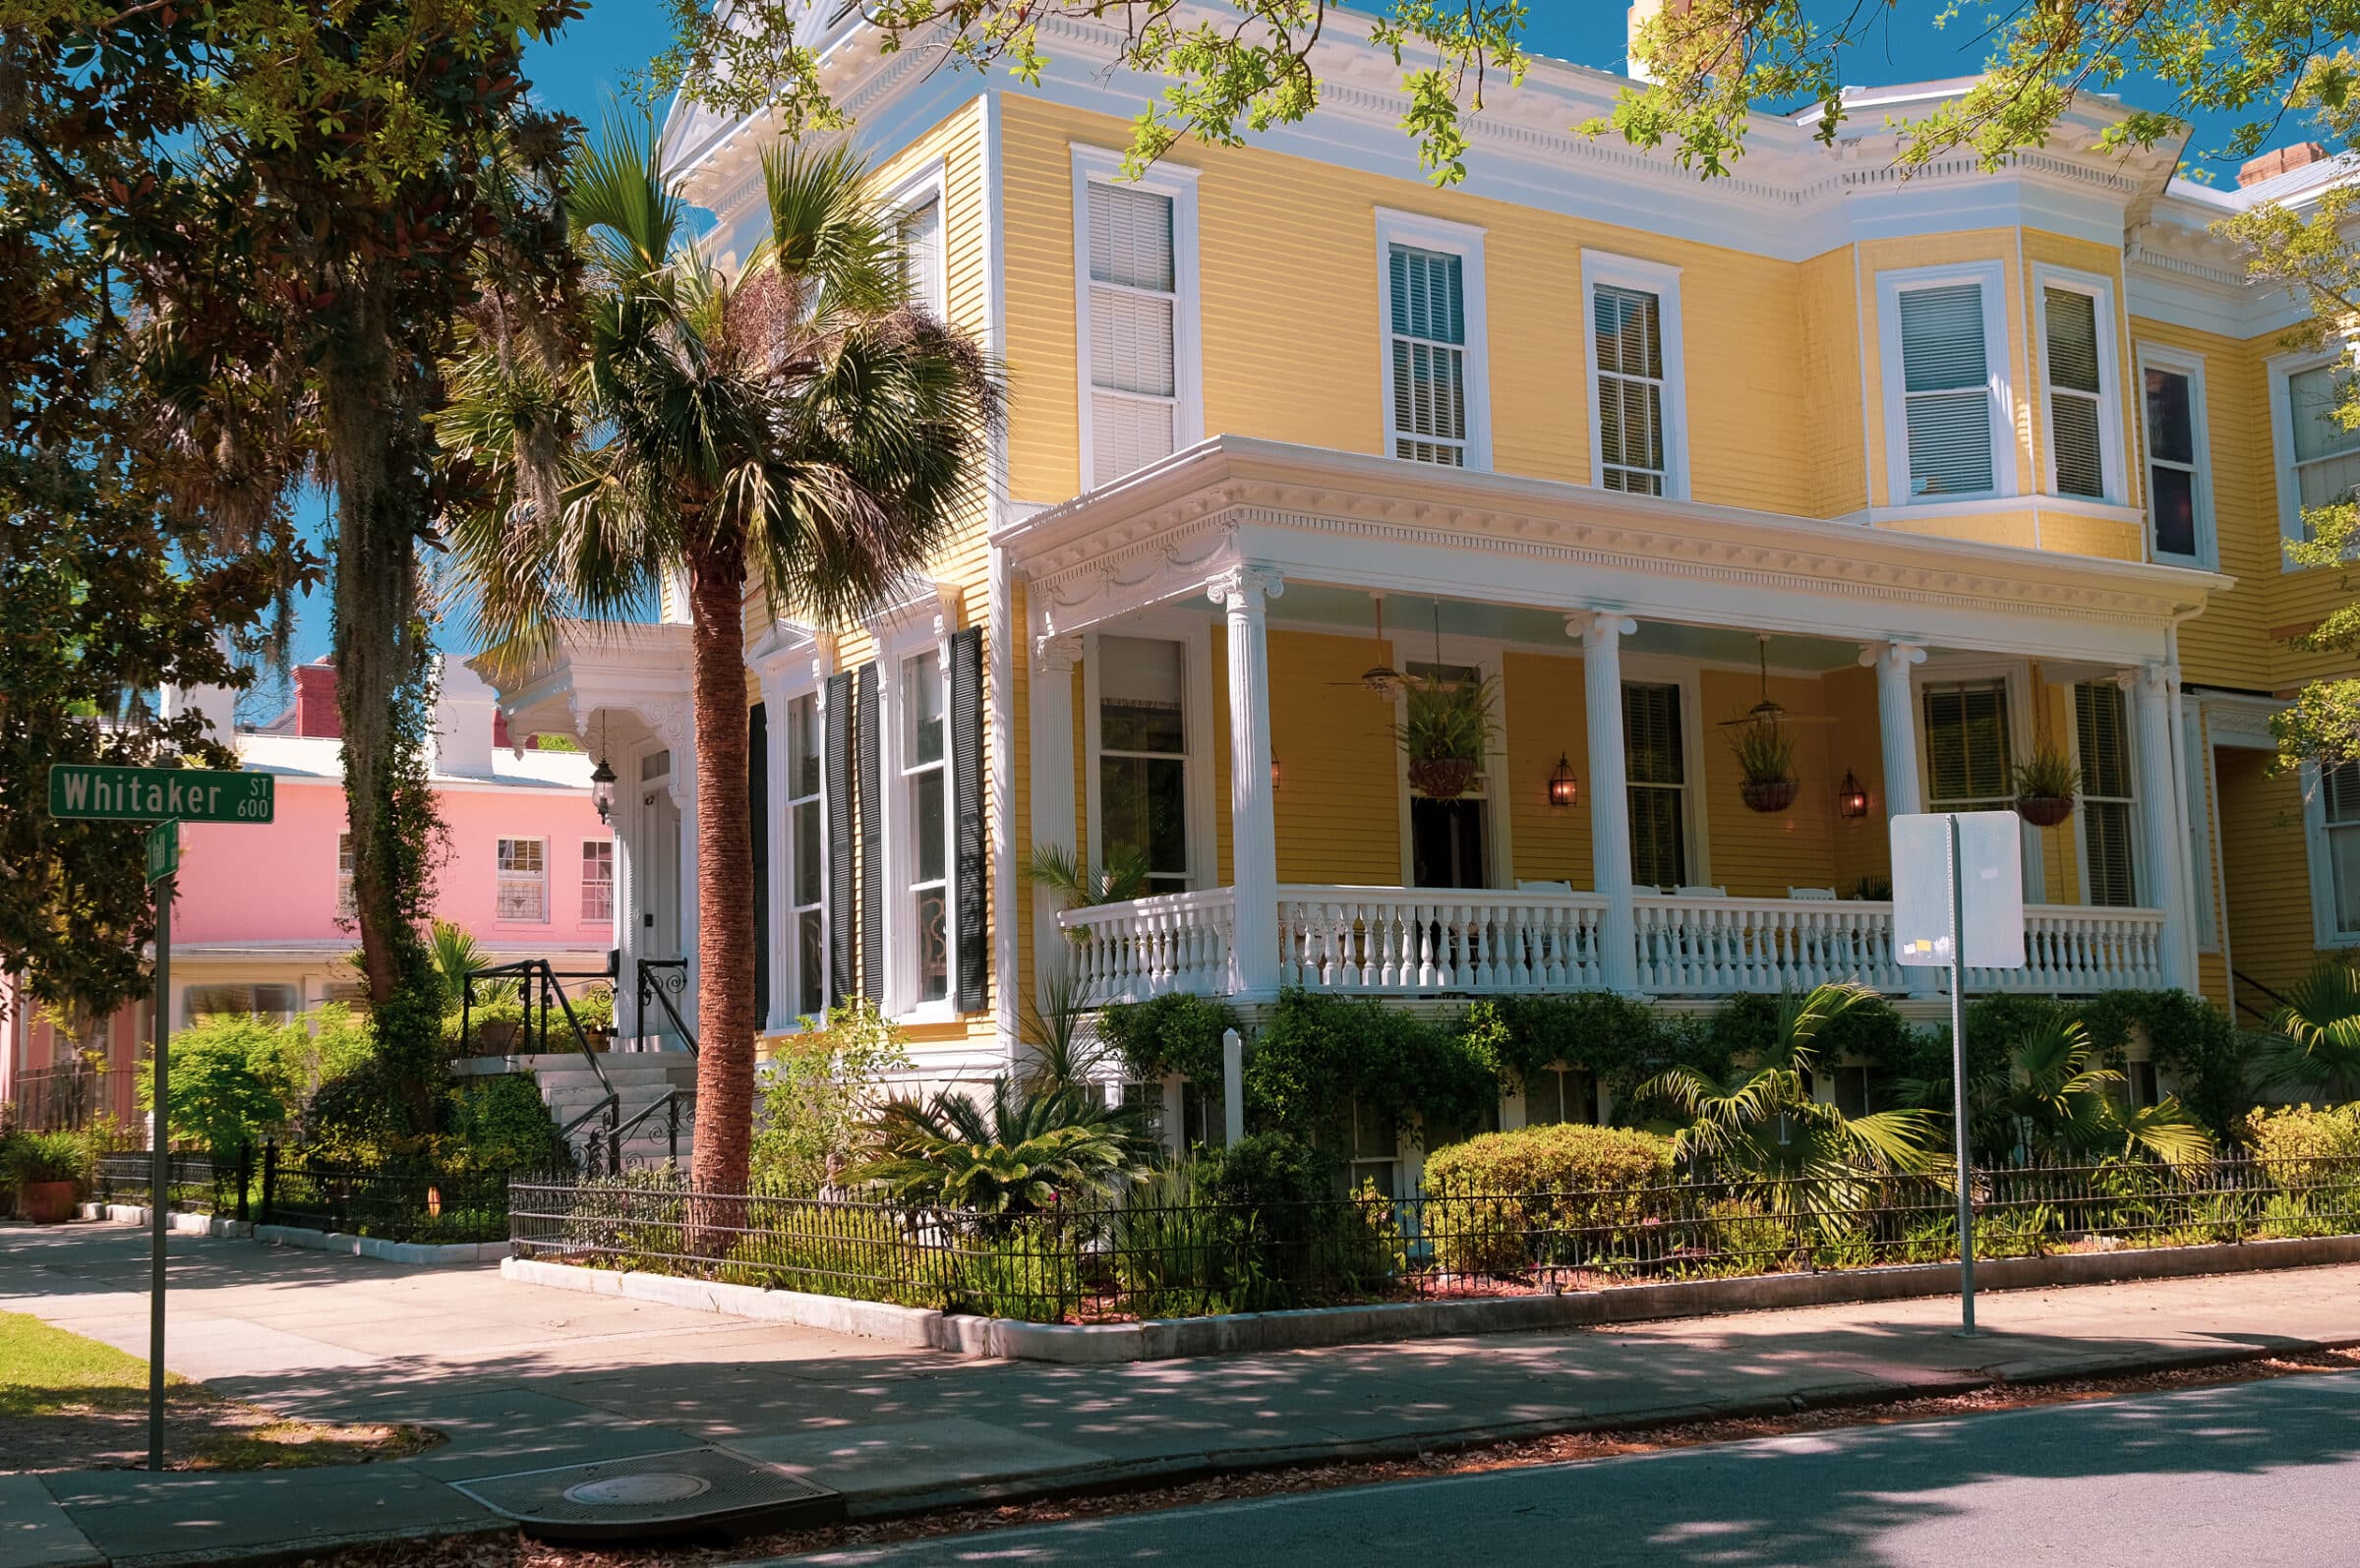 Kleurrijke koloniale gebouwen | Wat te doen + tips voor Savannah, Georgia 